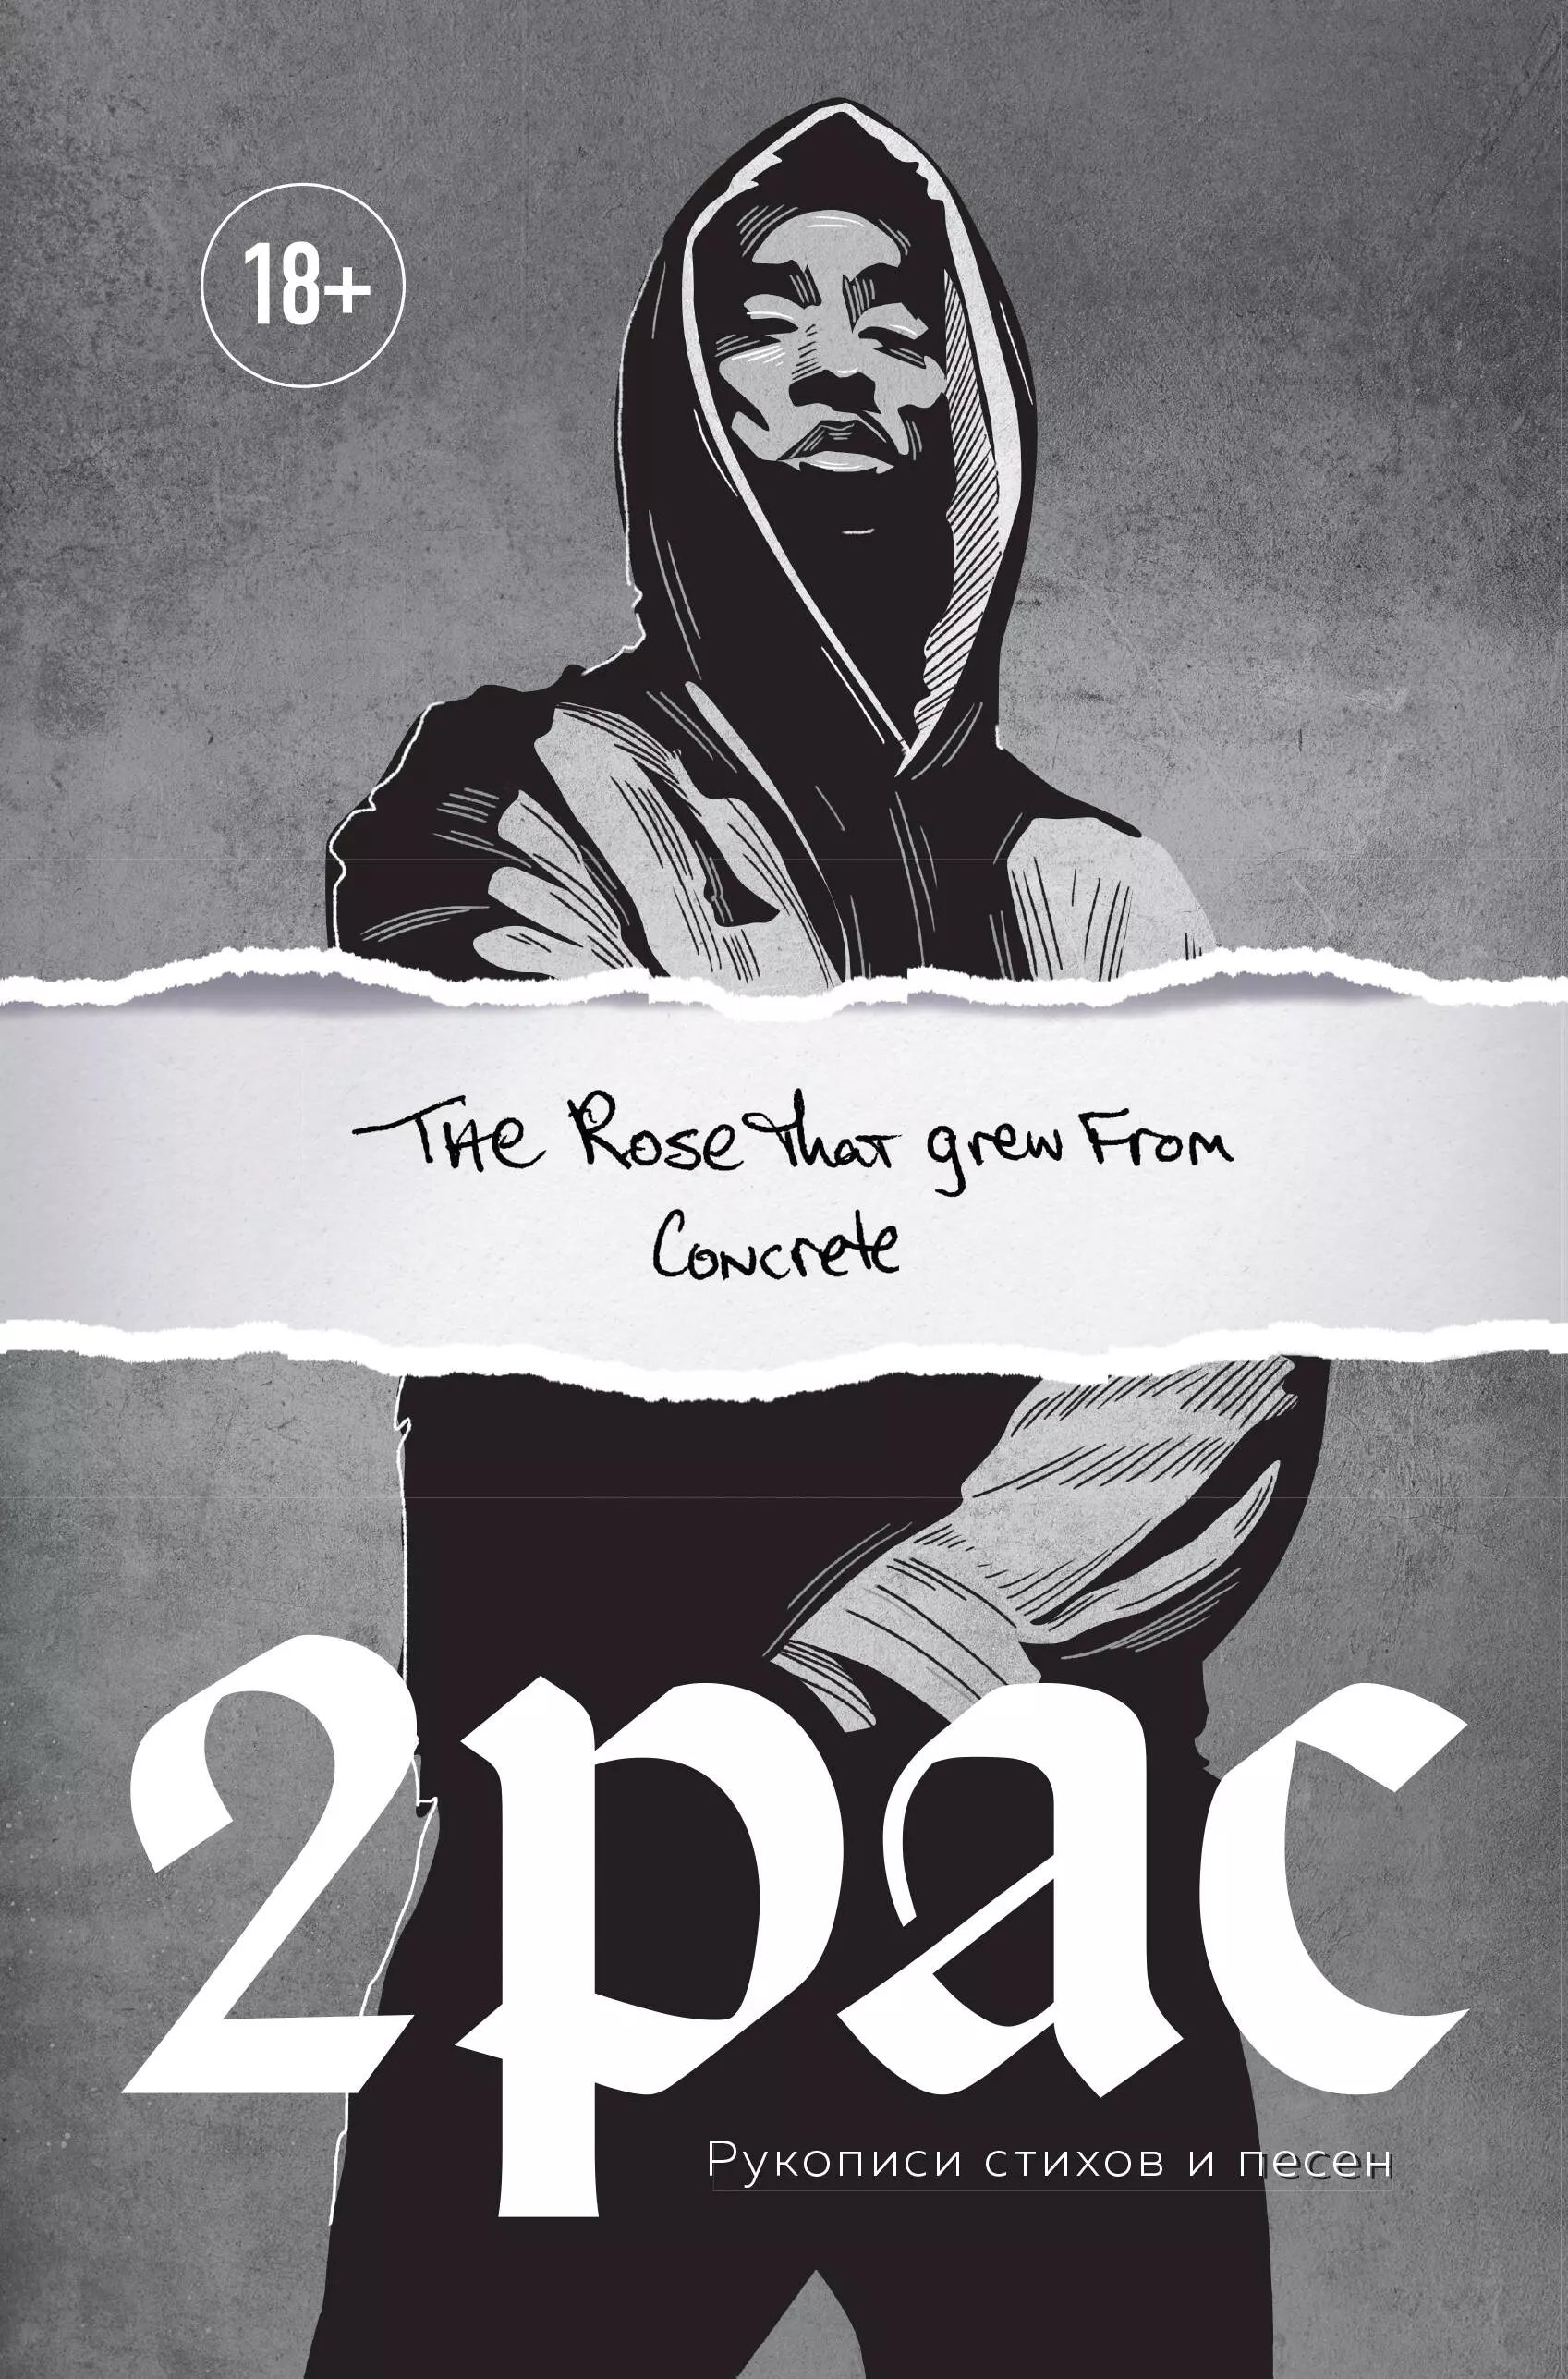 Шакур Тупак - Tupac Shakur. The rose that grew from concrete. Рукописи стихов и песен